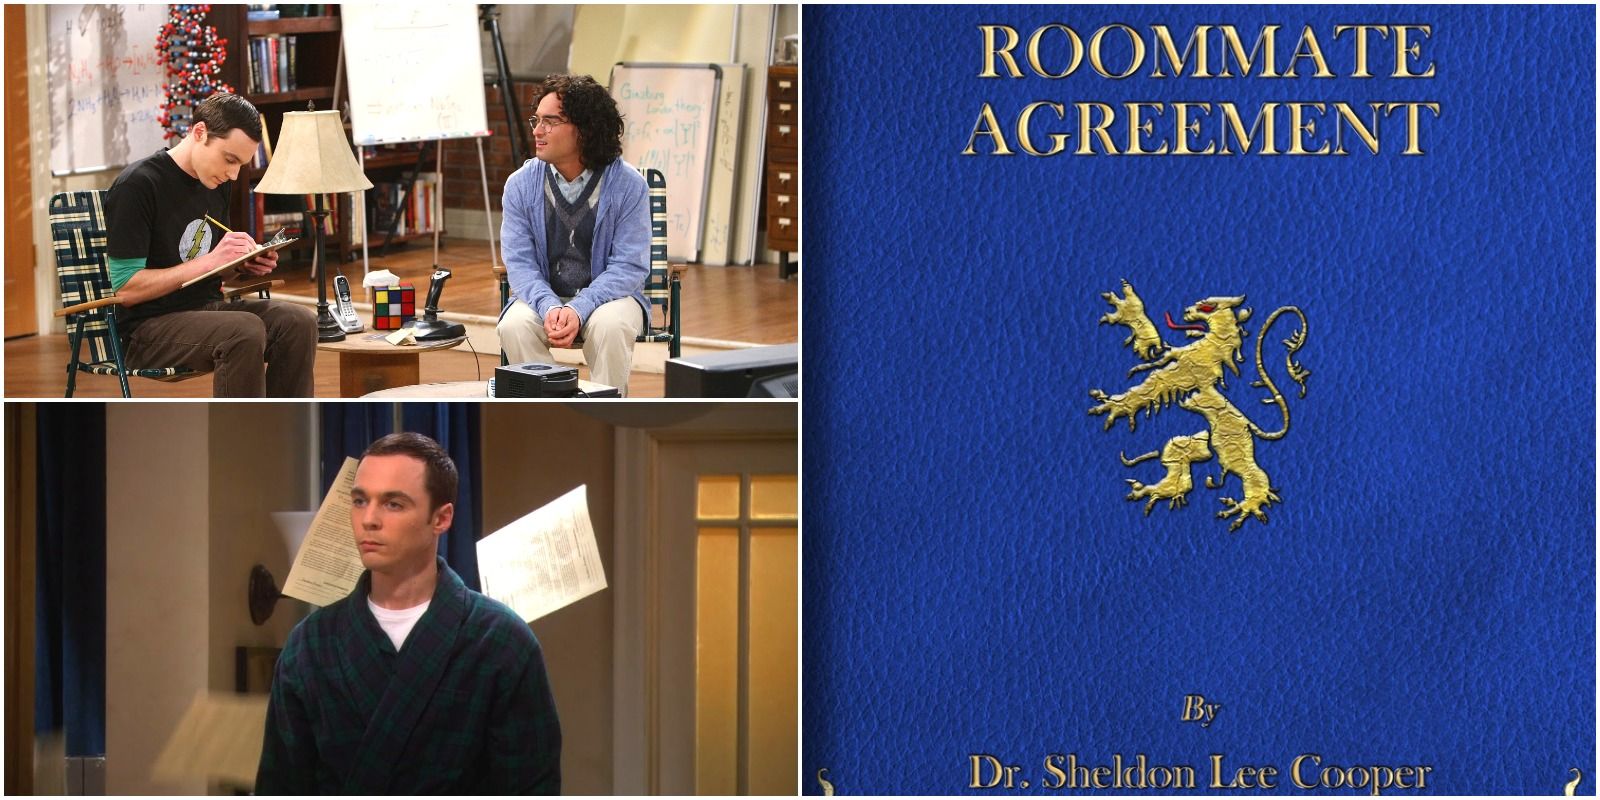 Sheldon forging the agreement, abandoning the agreement, and the agreement itself. 